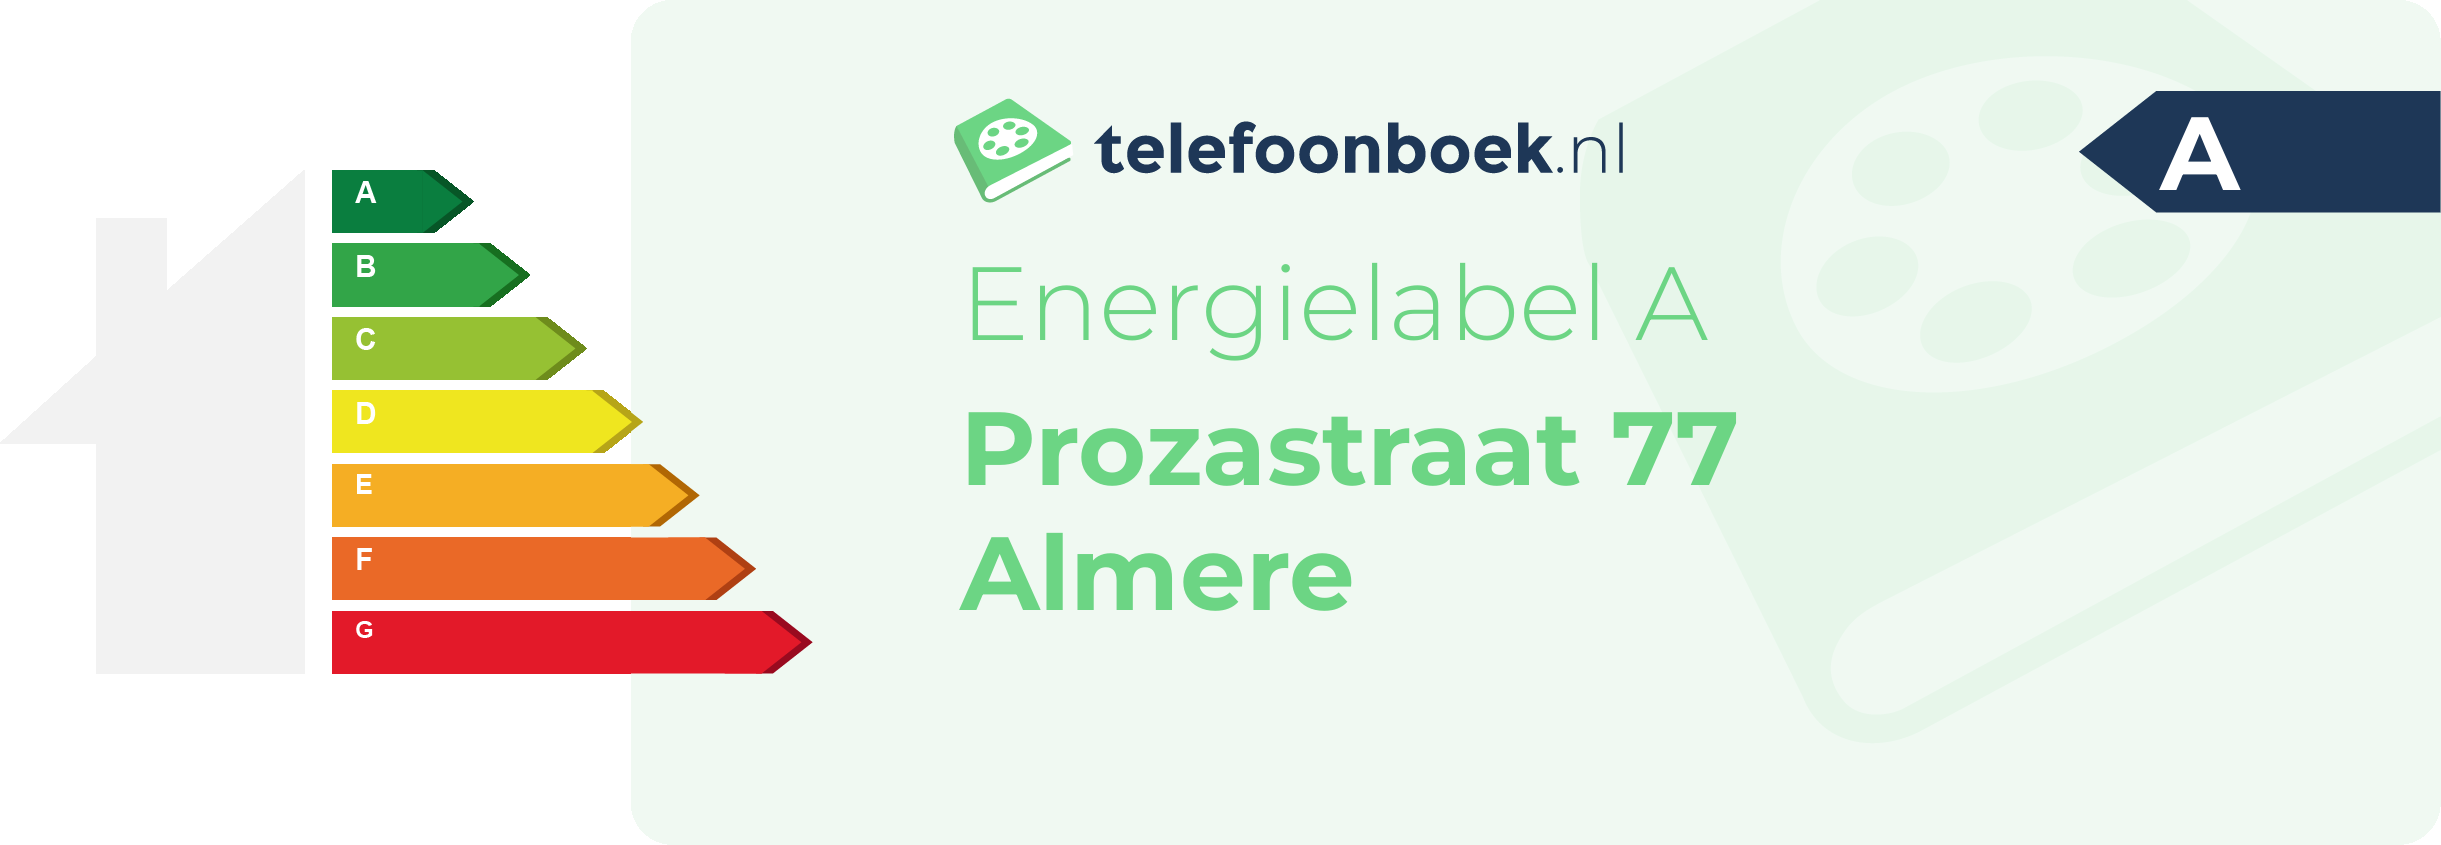 Energielabel Prozastraat 77 Almere